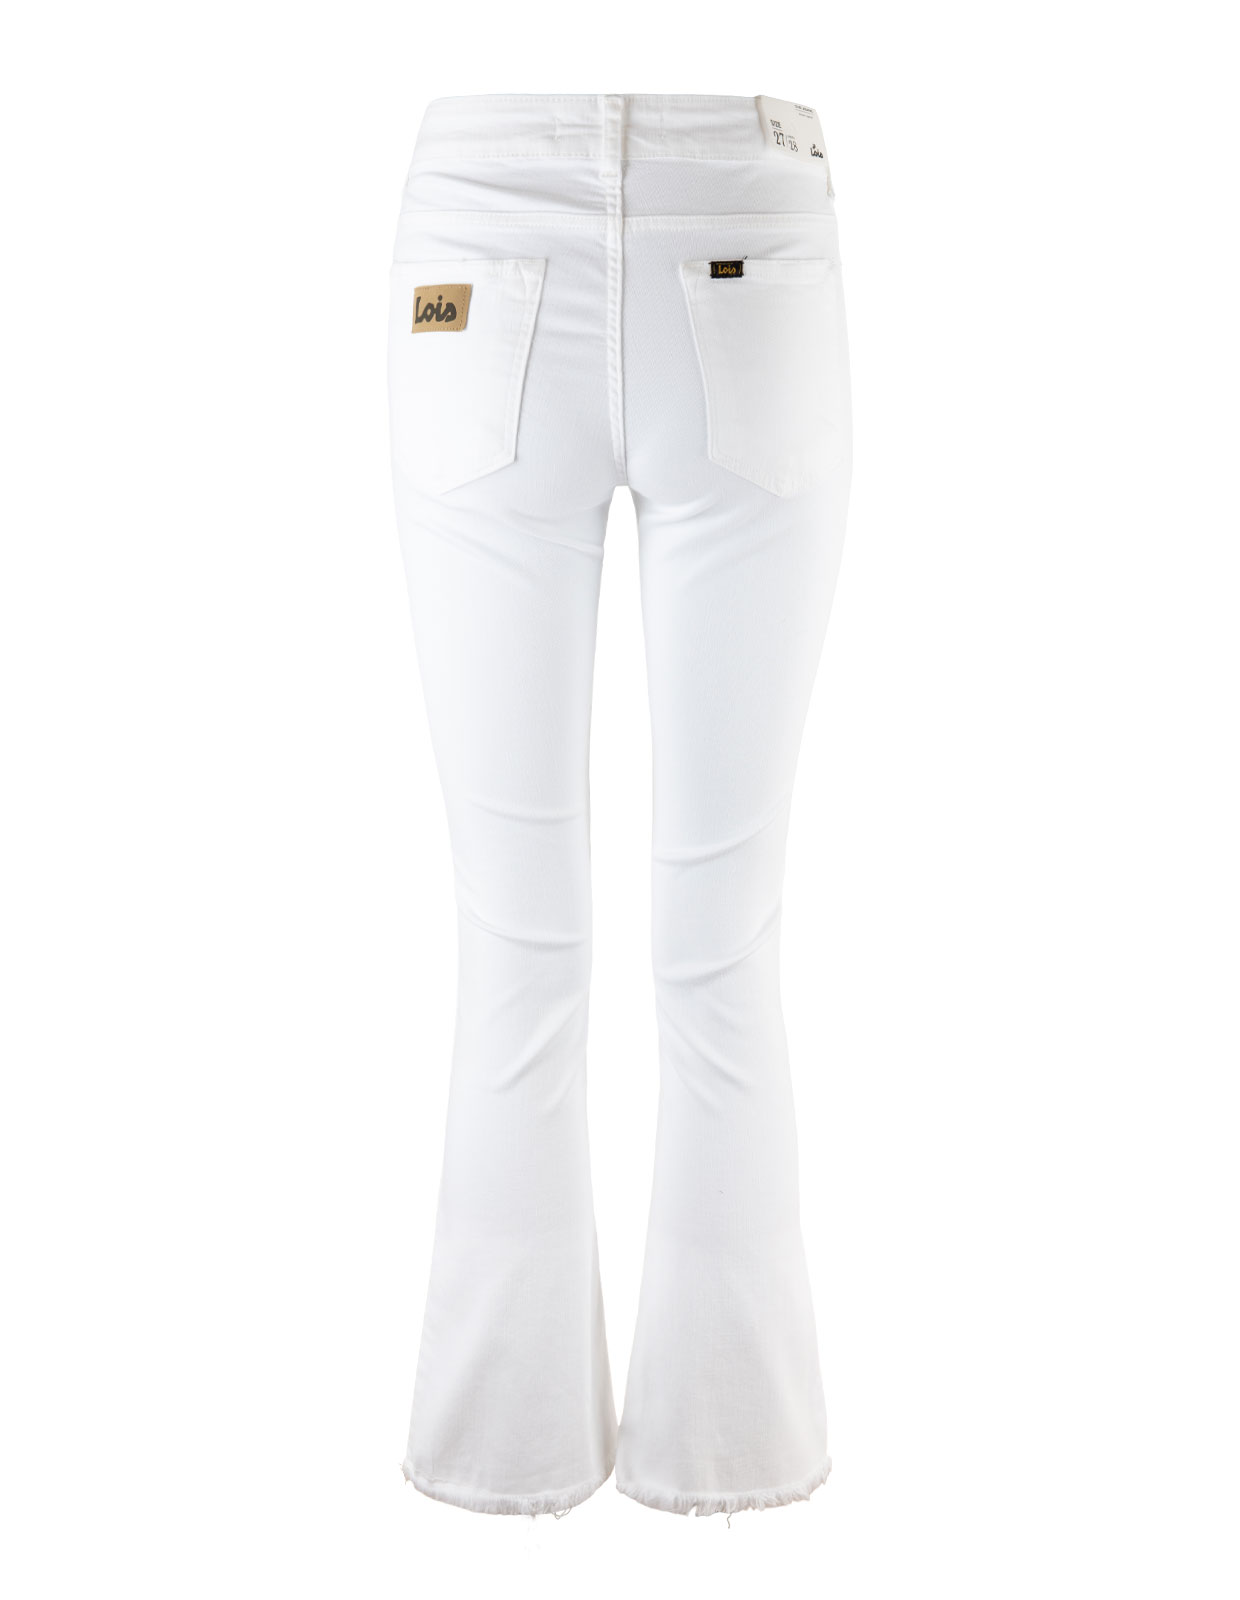 Marbella Edge Jeans White